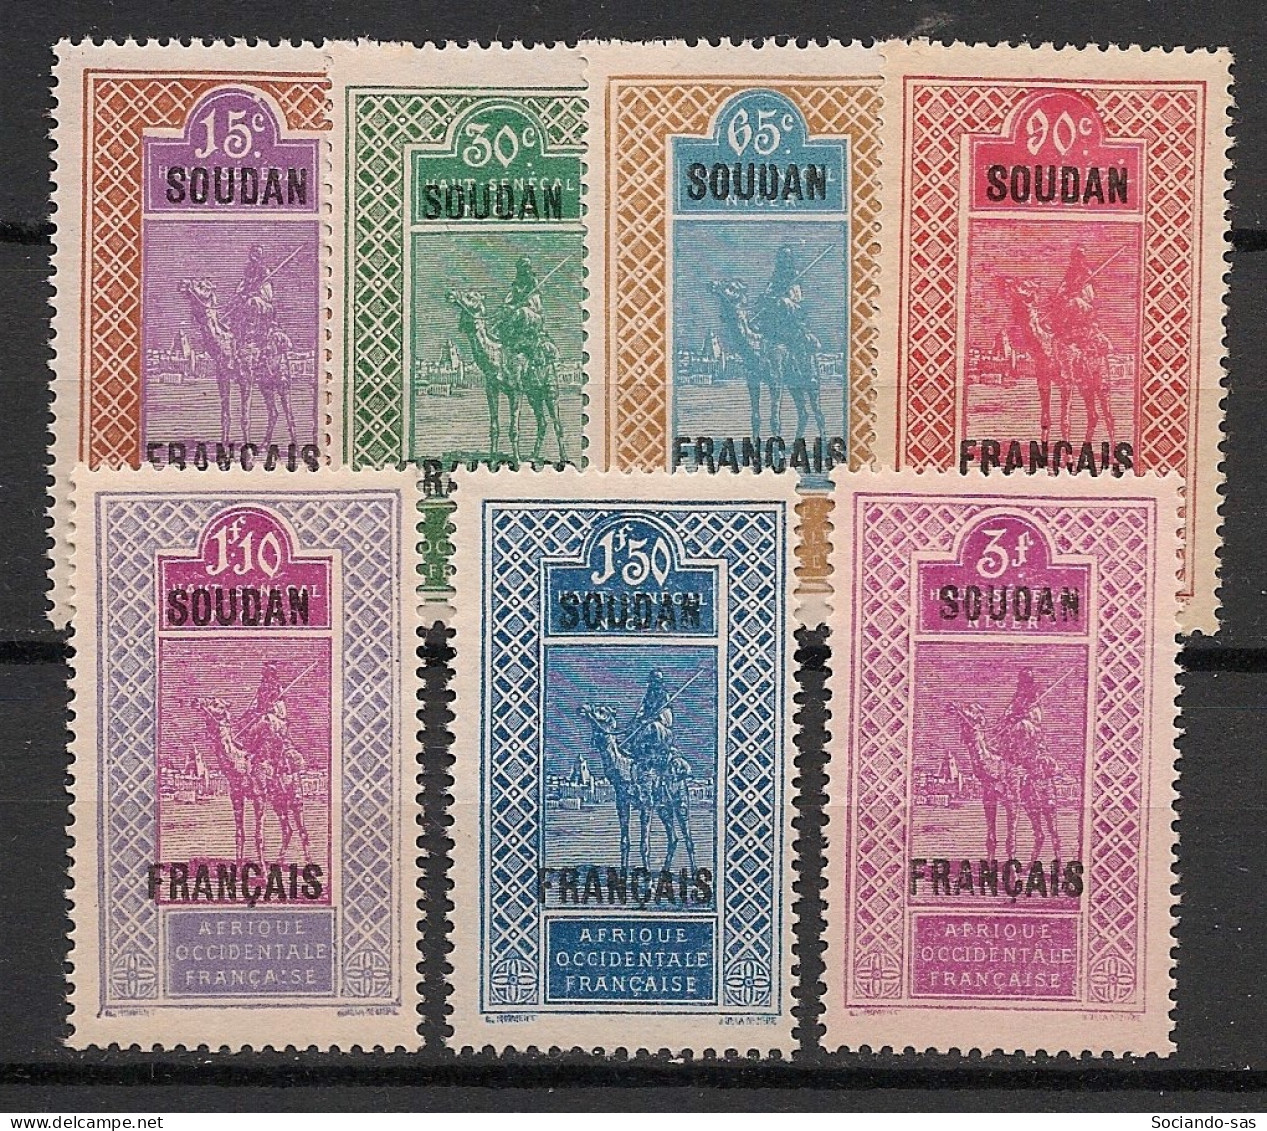 SOUDAN - 1927-30 - N°YT. 53 à 59 - Série Complète - Neuf Luxe ** / MNH / Postfrisch - Unused Stamps